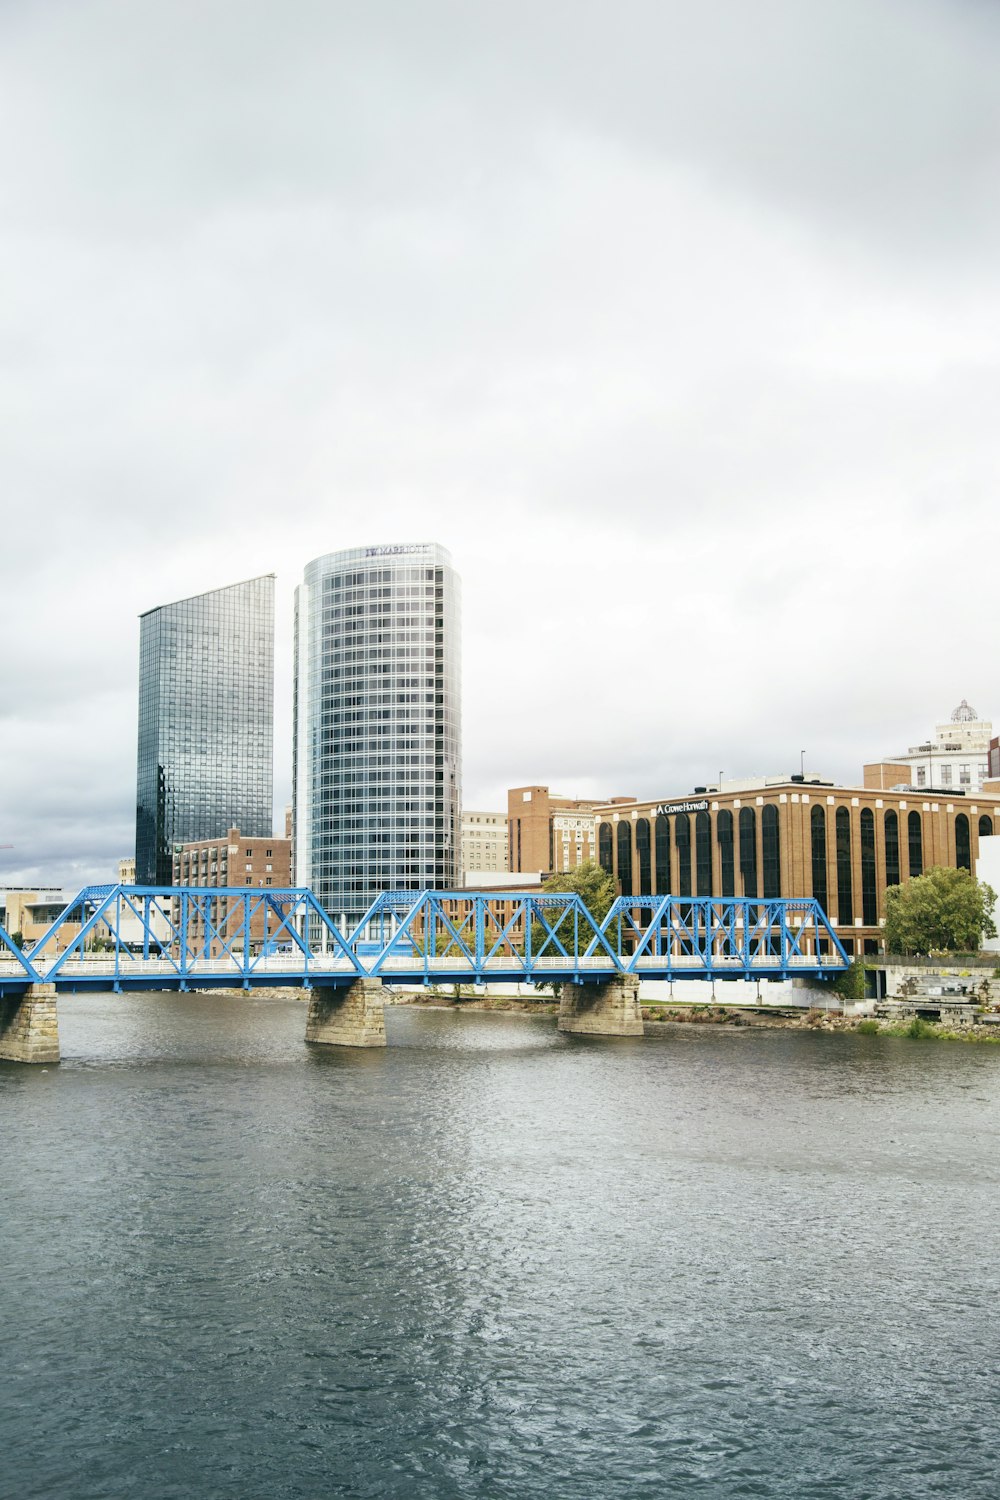 blue bridge over river near city buildings during daytime